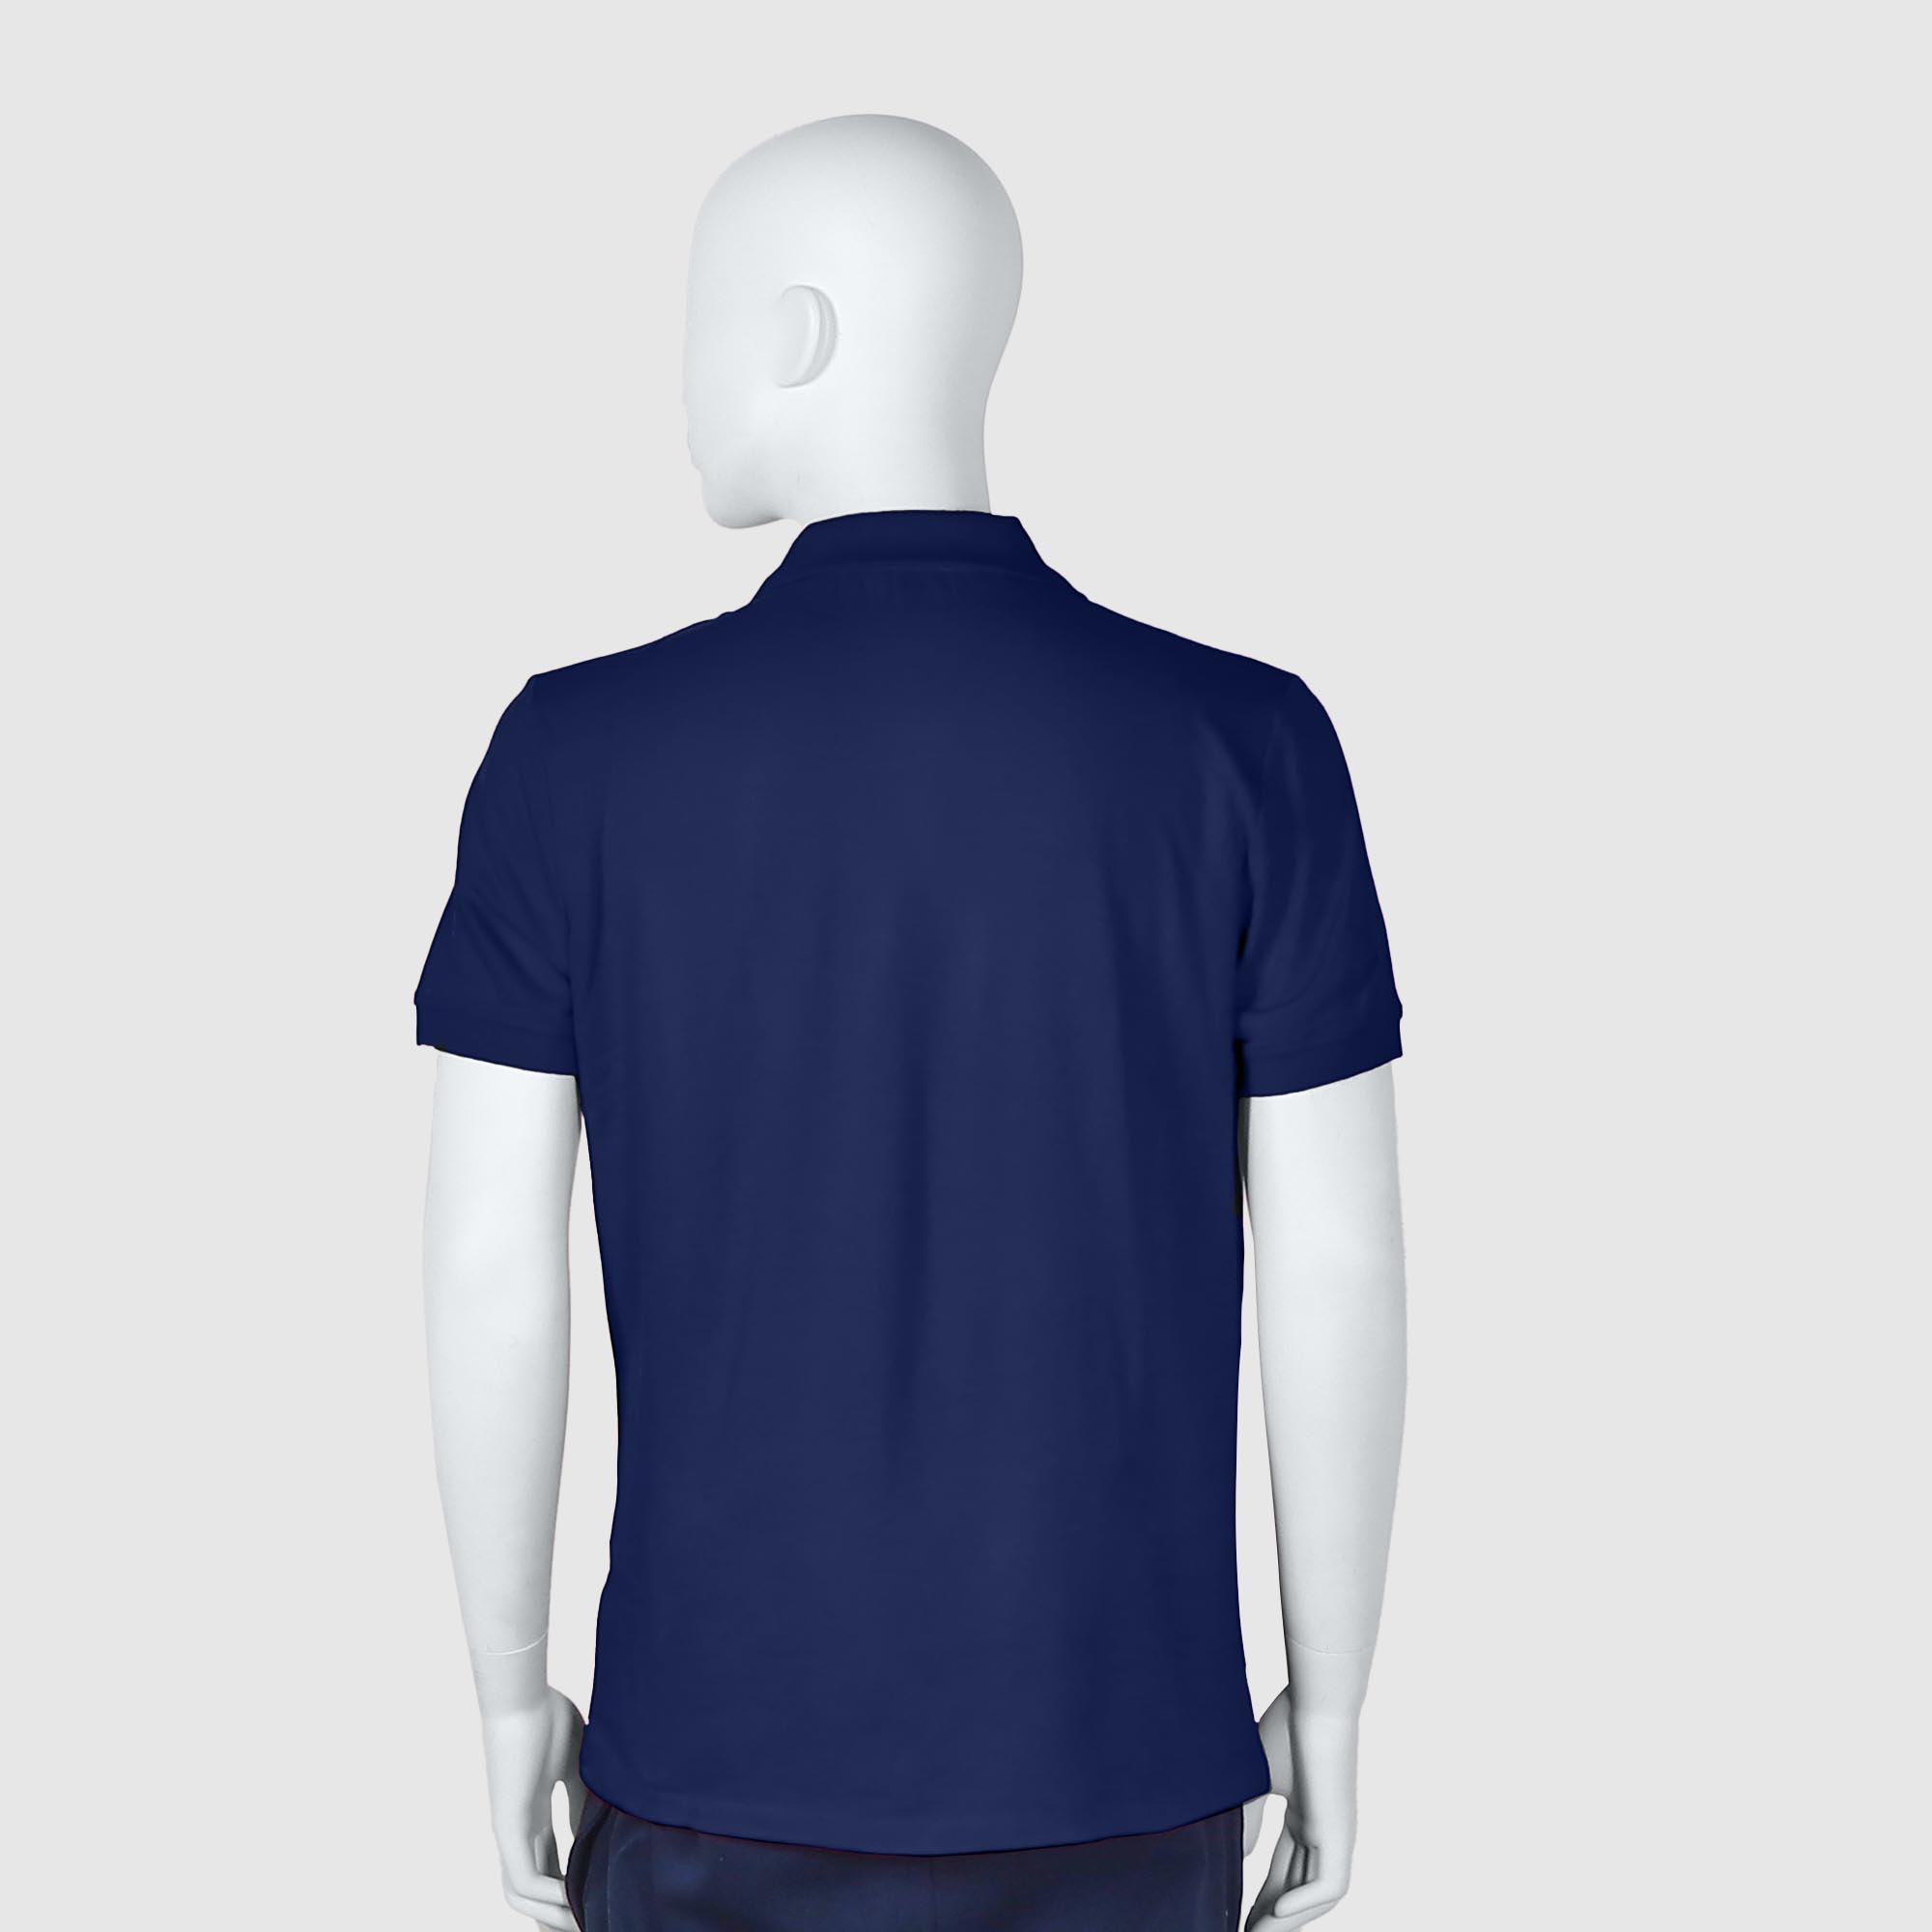 Мужская футболка-поло Diva Teks синяя (DTD-10), цвет синий, размер 48-50 - фото 2